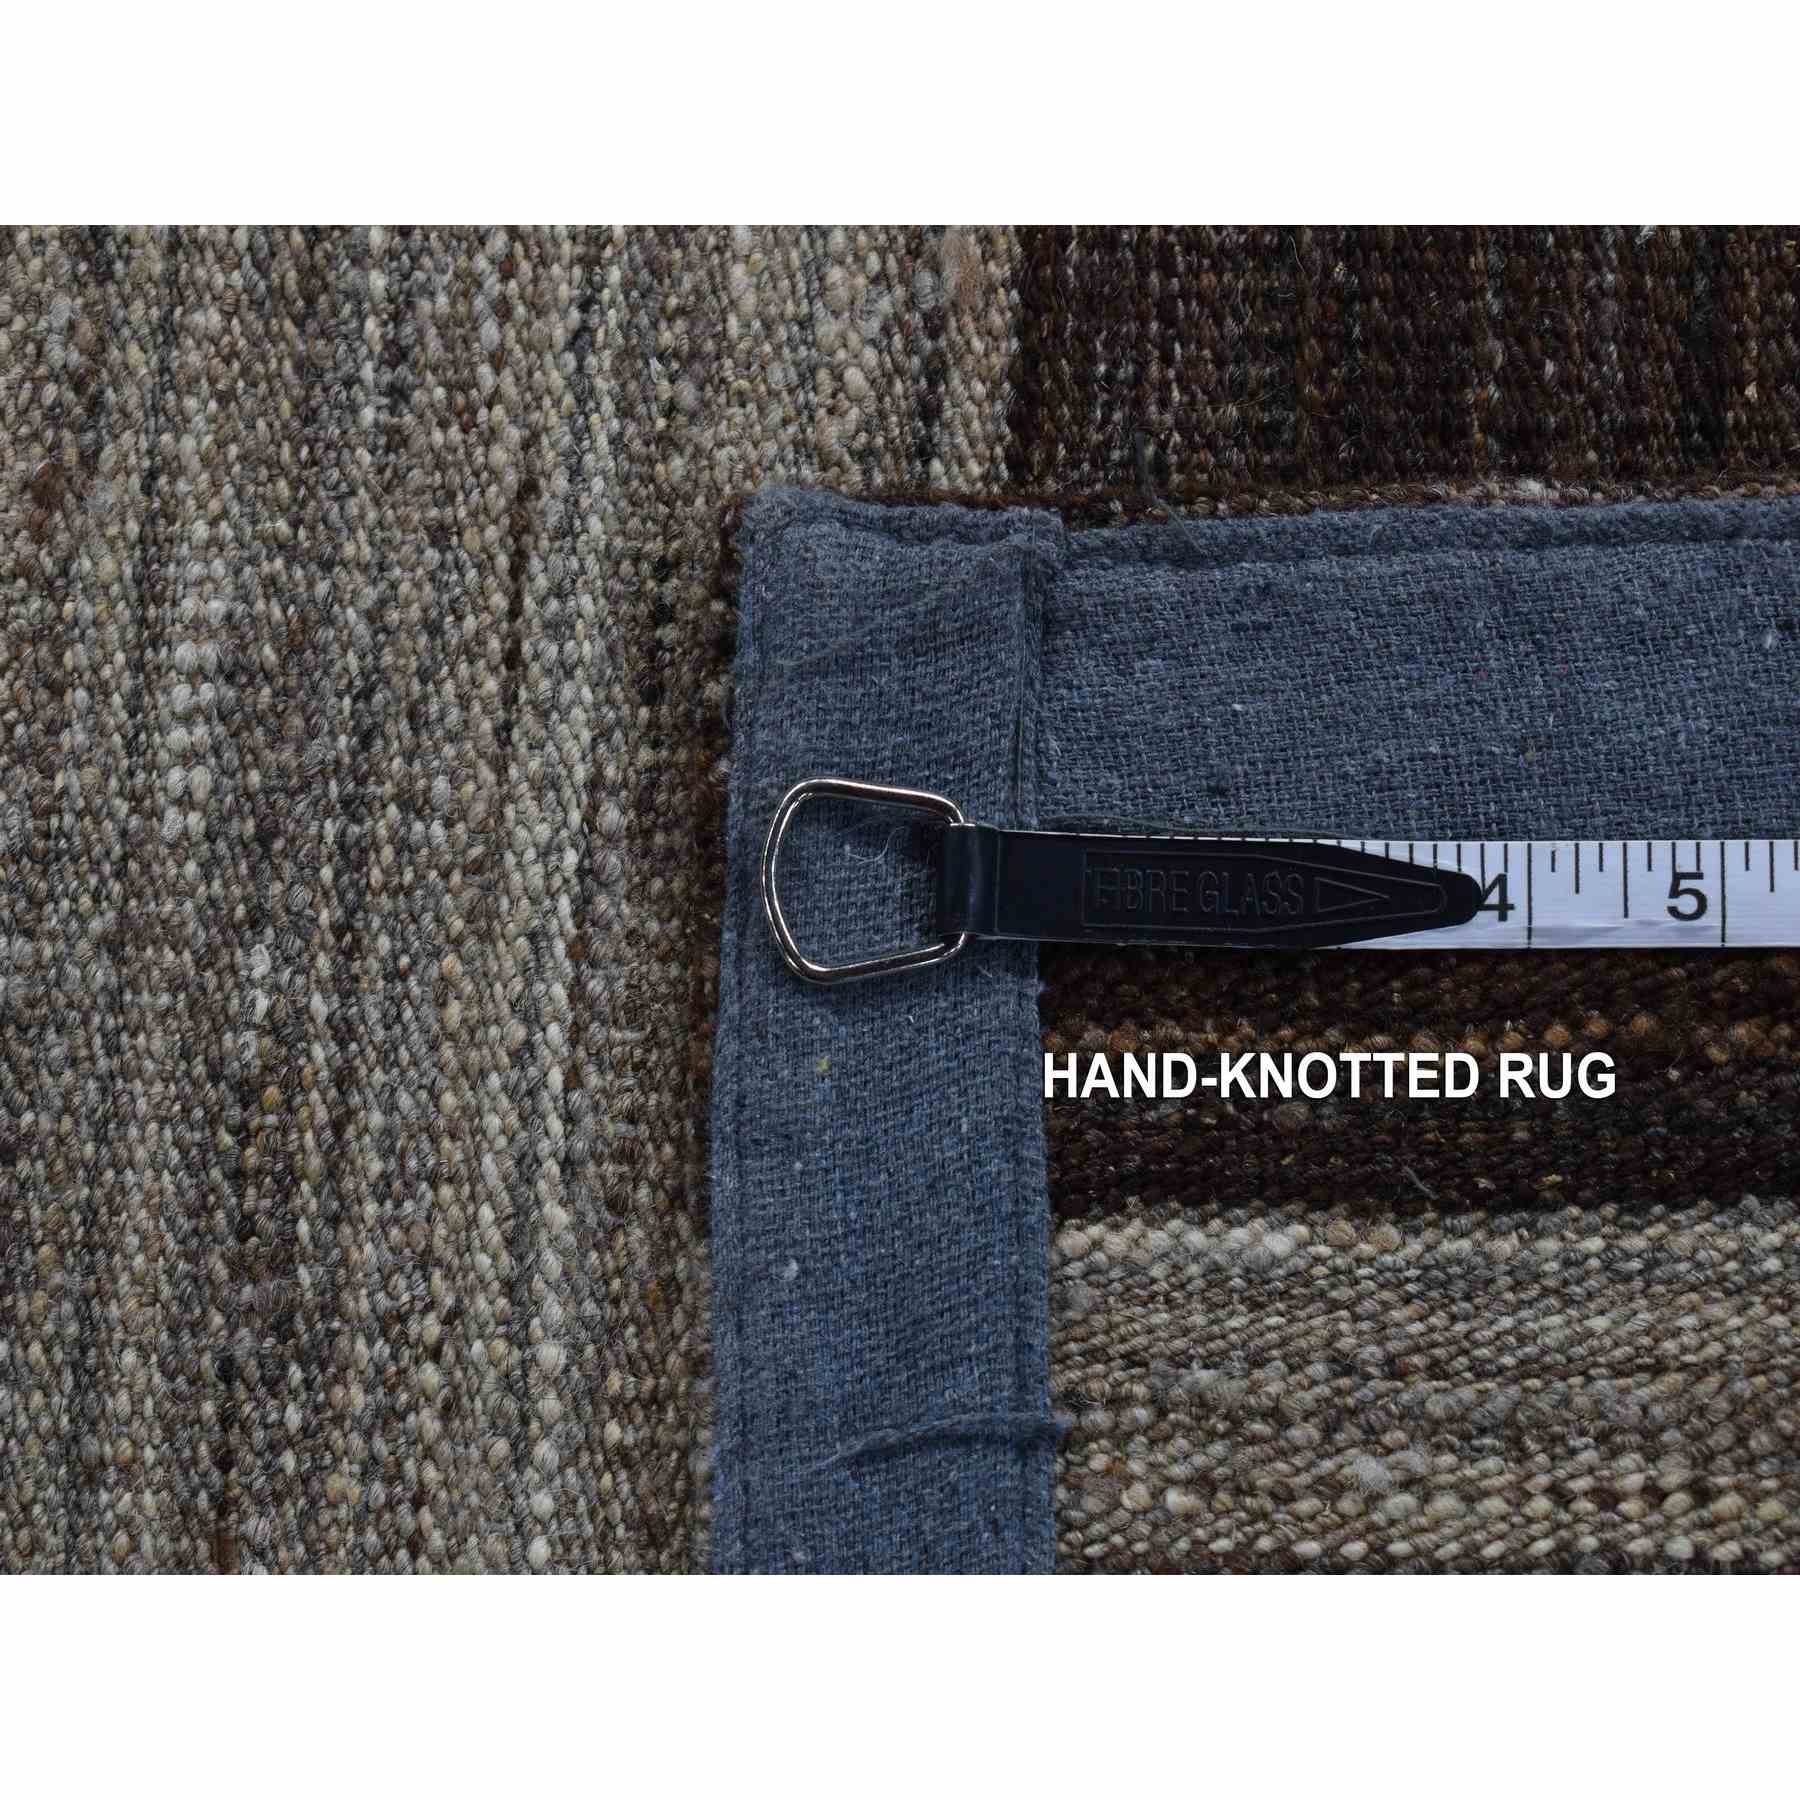 Flat-Weave-Hand-Woven-Rug-439110